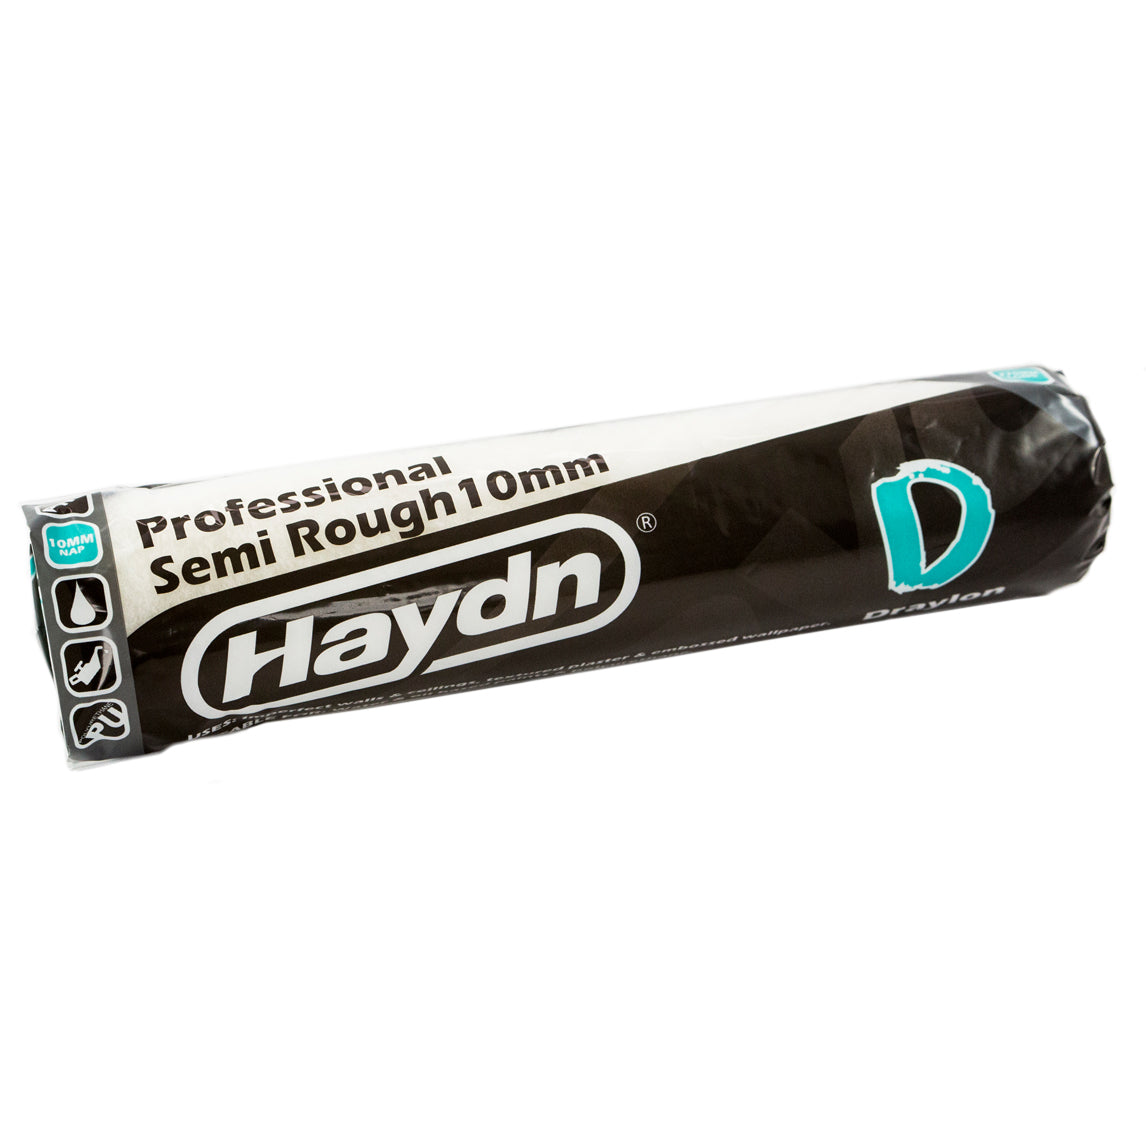 Professional Draylon 10mm Semi Rough Roller Sleeve